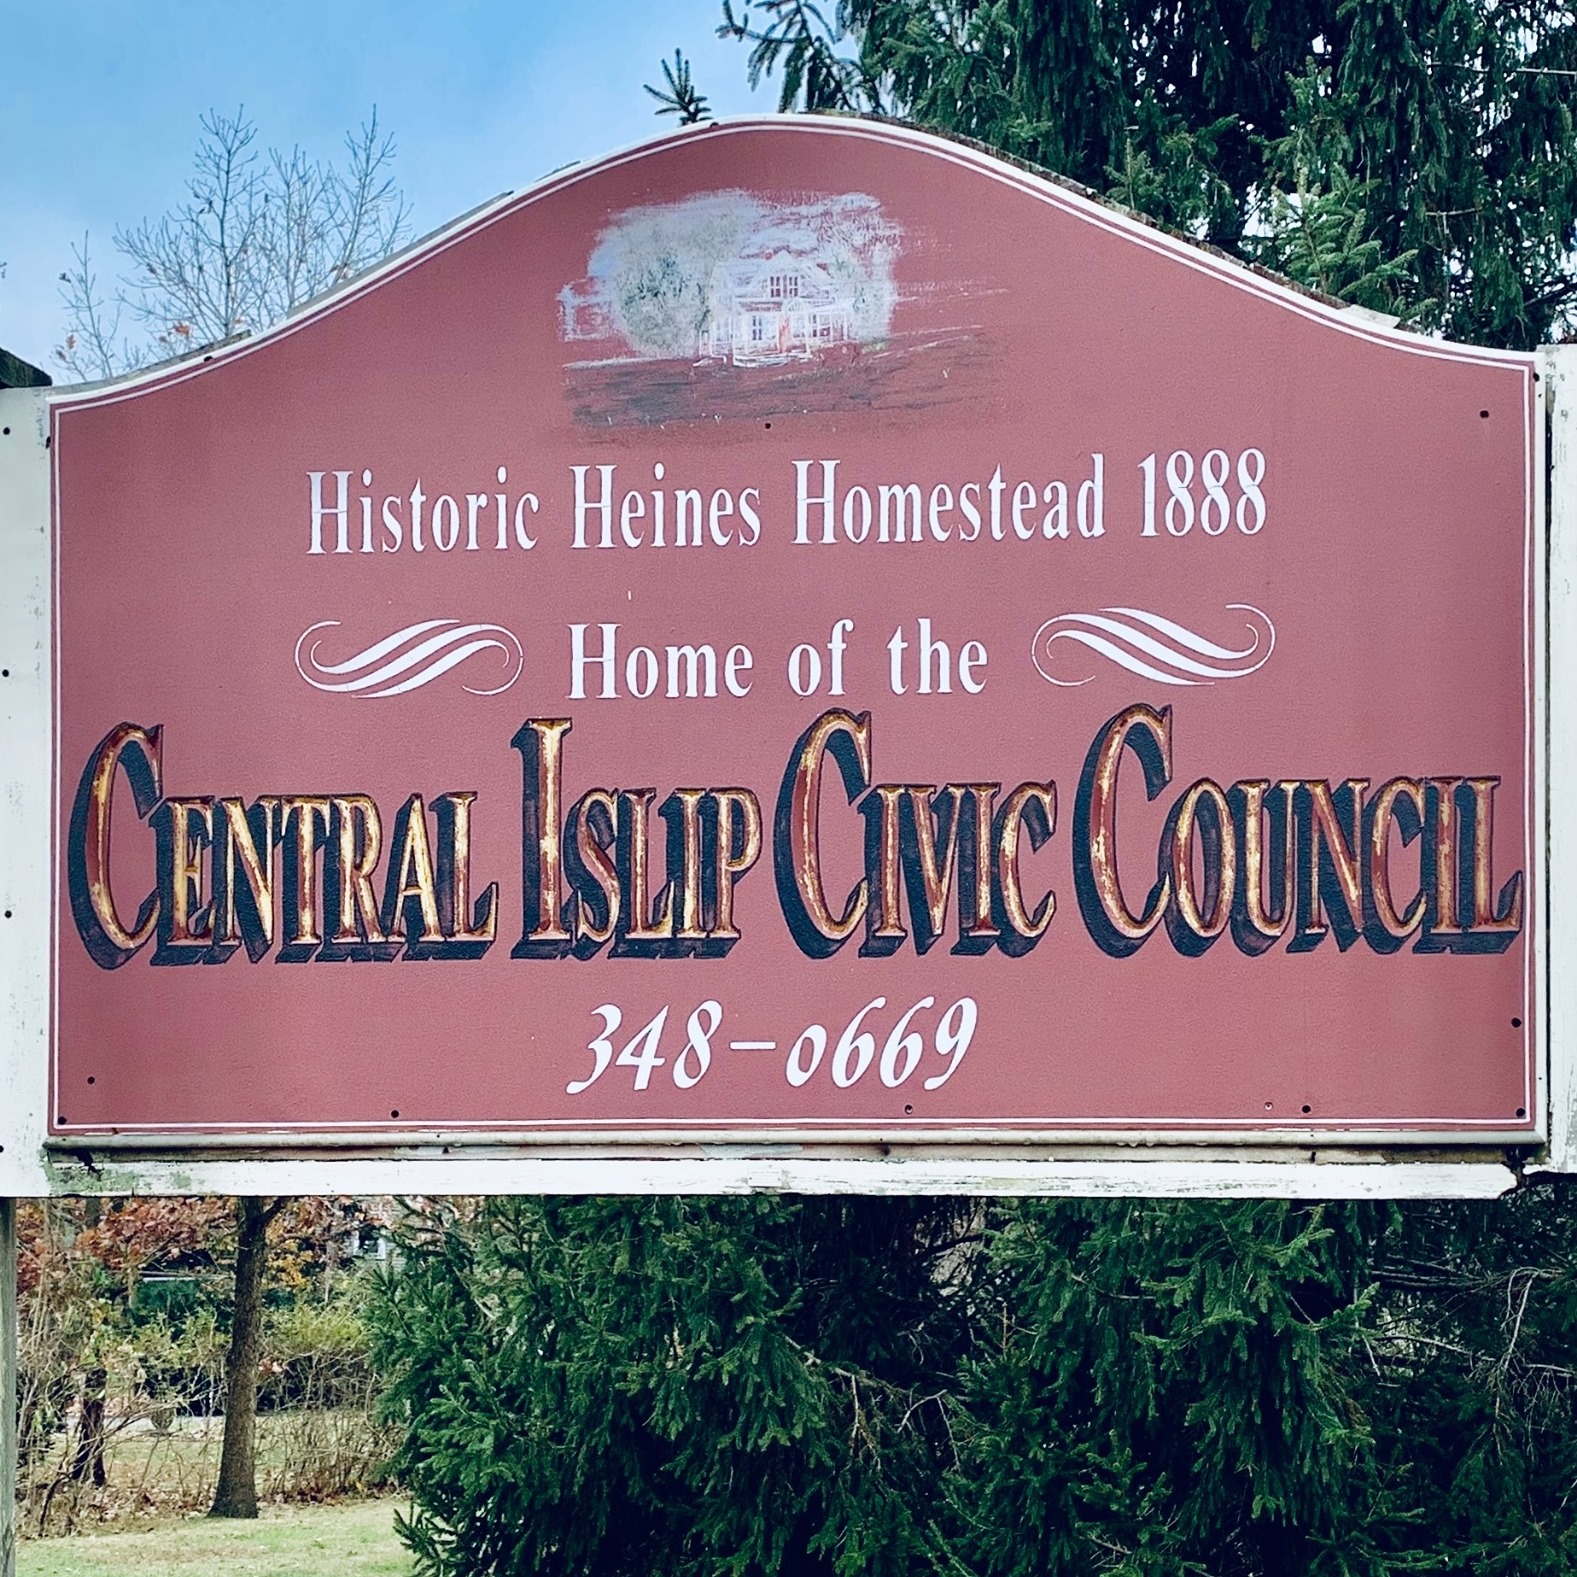 Central Islip Civic Council